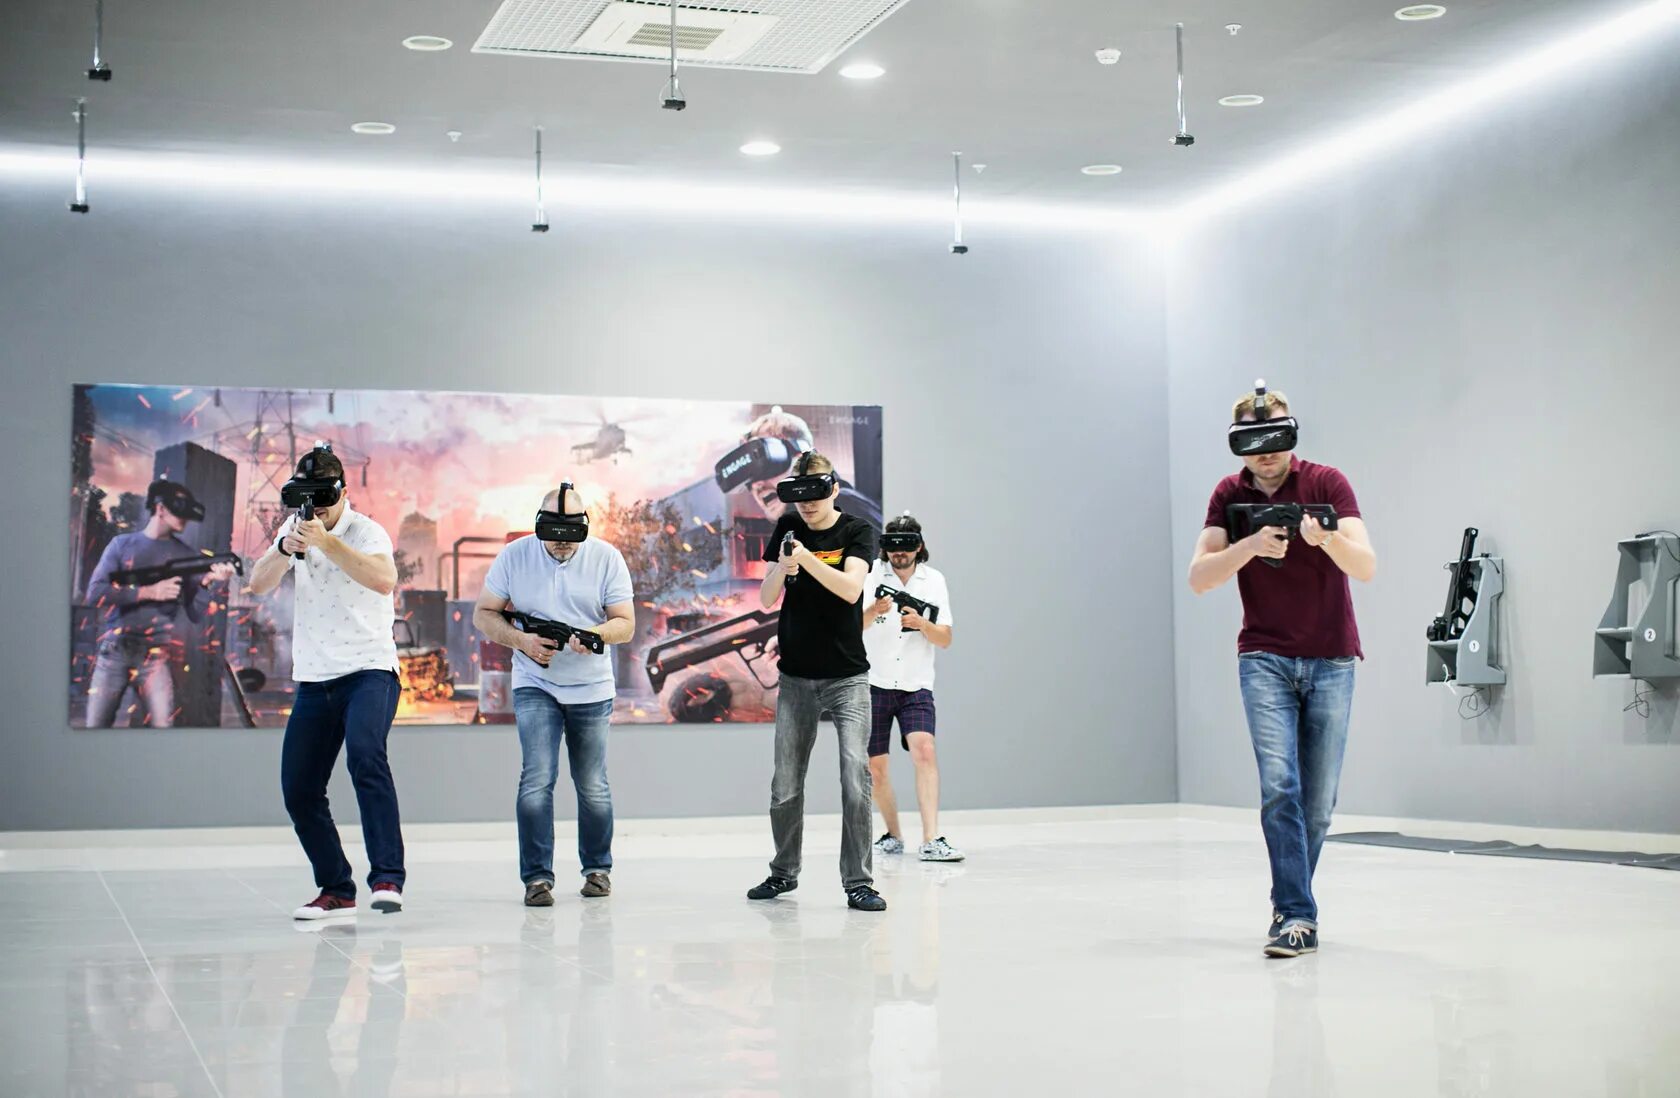 Парк виртуальной реальности (VR парк). Парк развлечений engage VR. Виртуальная реальность в развлечениях. Виртуальная реальность в парке.